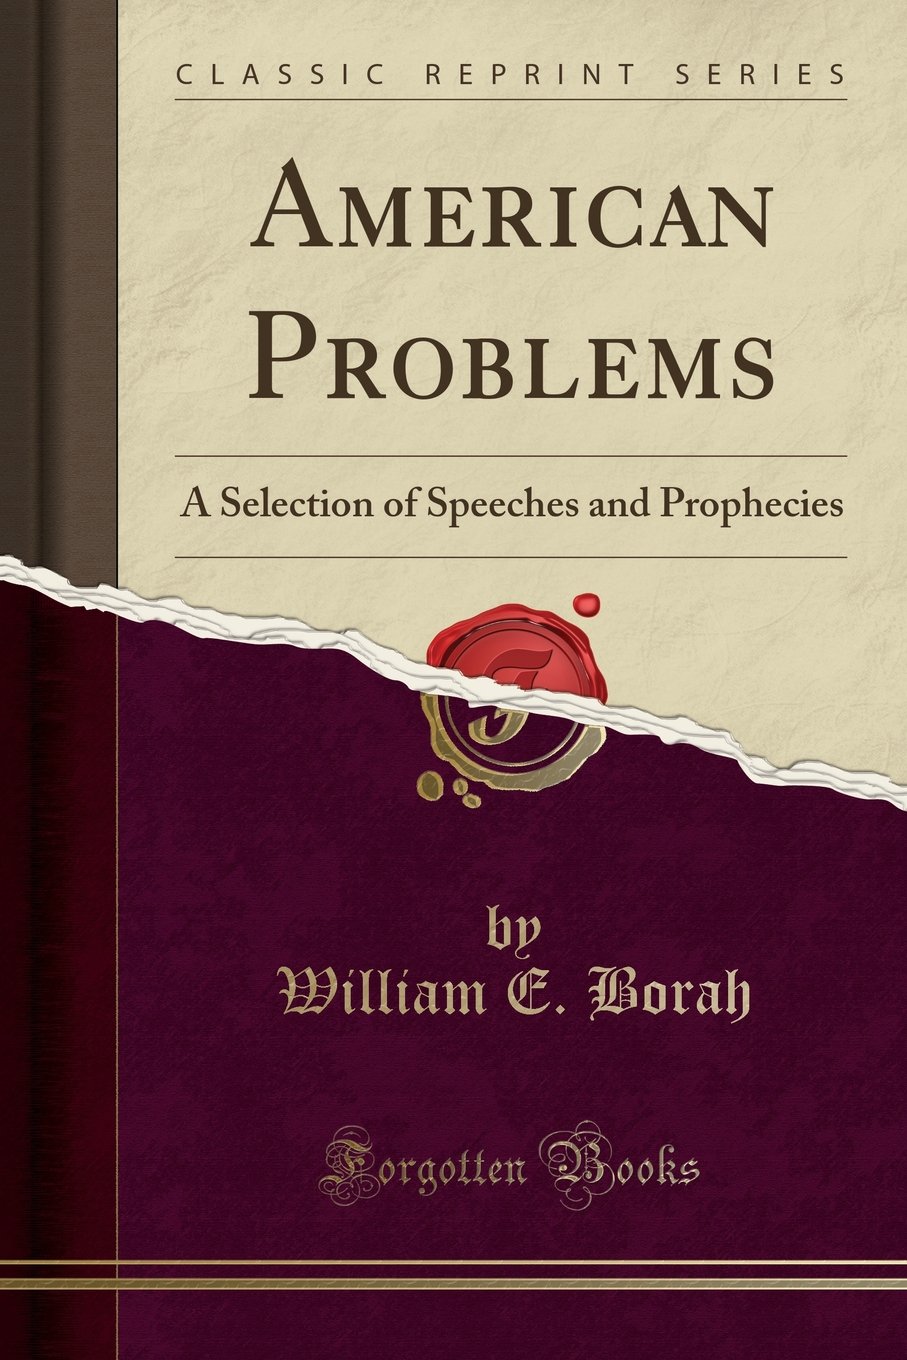 William E. Borah and the role of government (book cover)